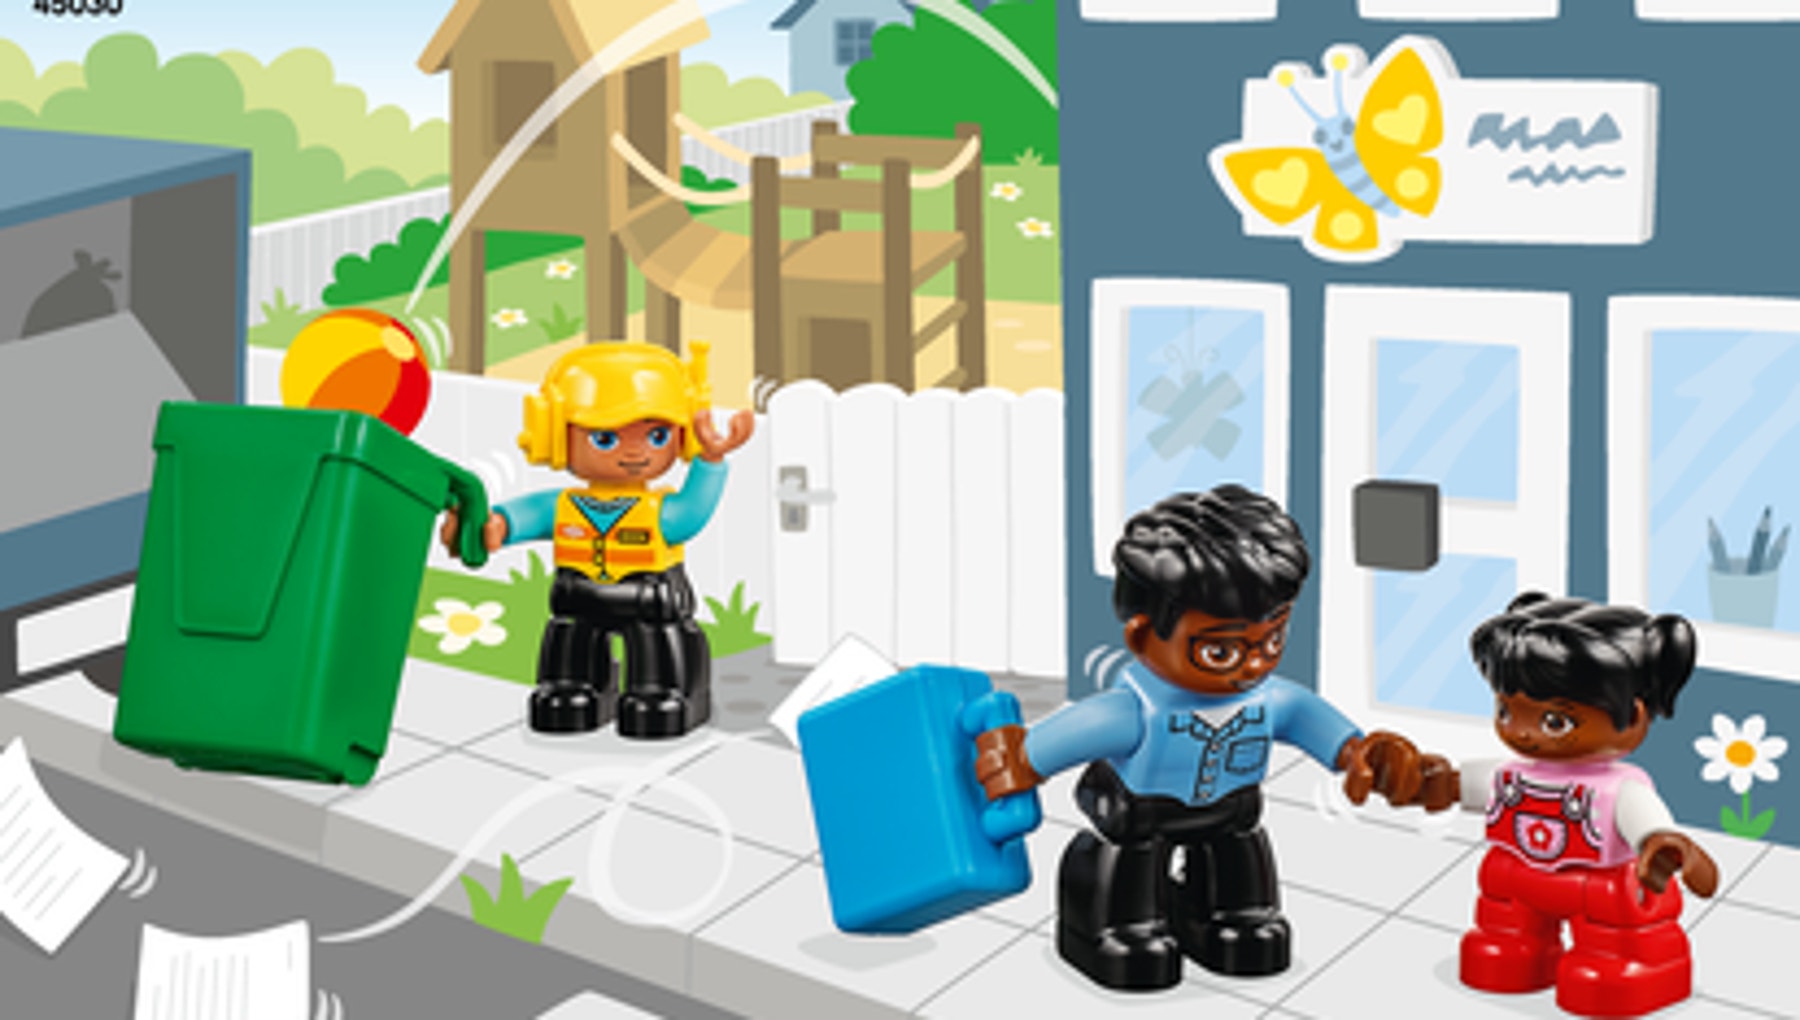 Pygmalion Uundgåelig Boost People Set by LEGO® Education | Product Resources & Support